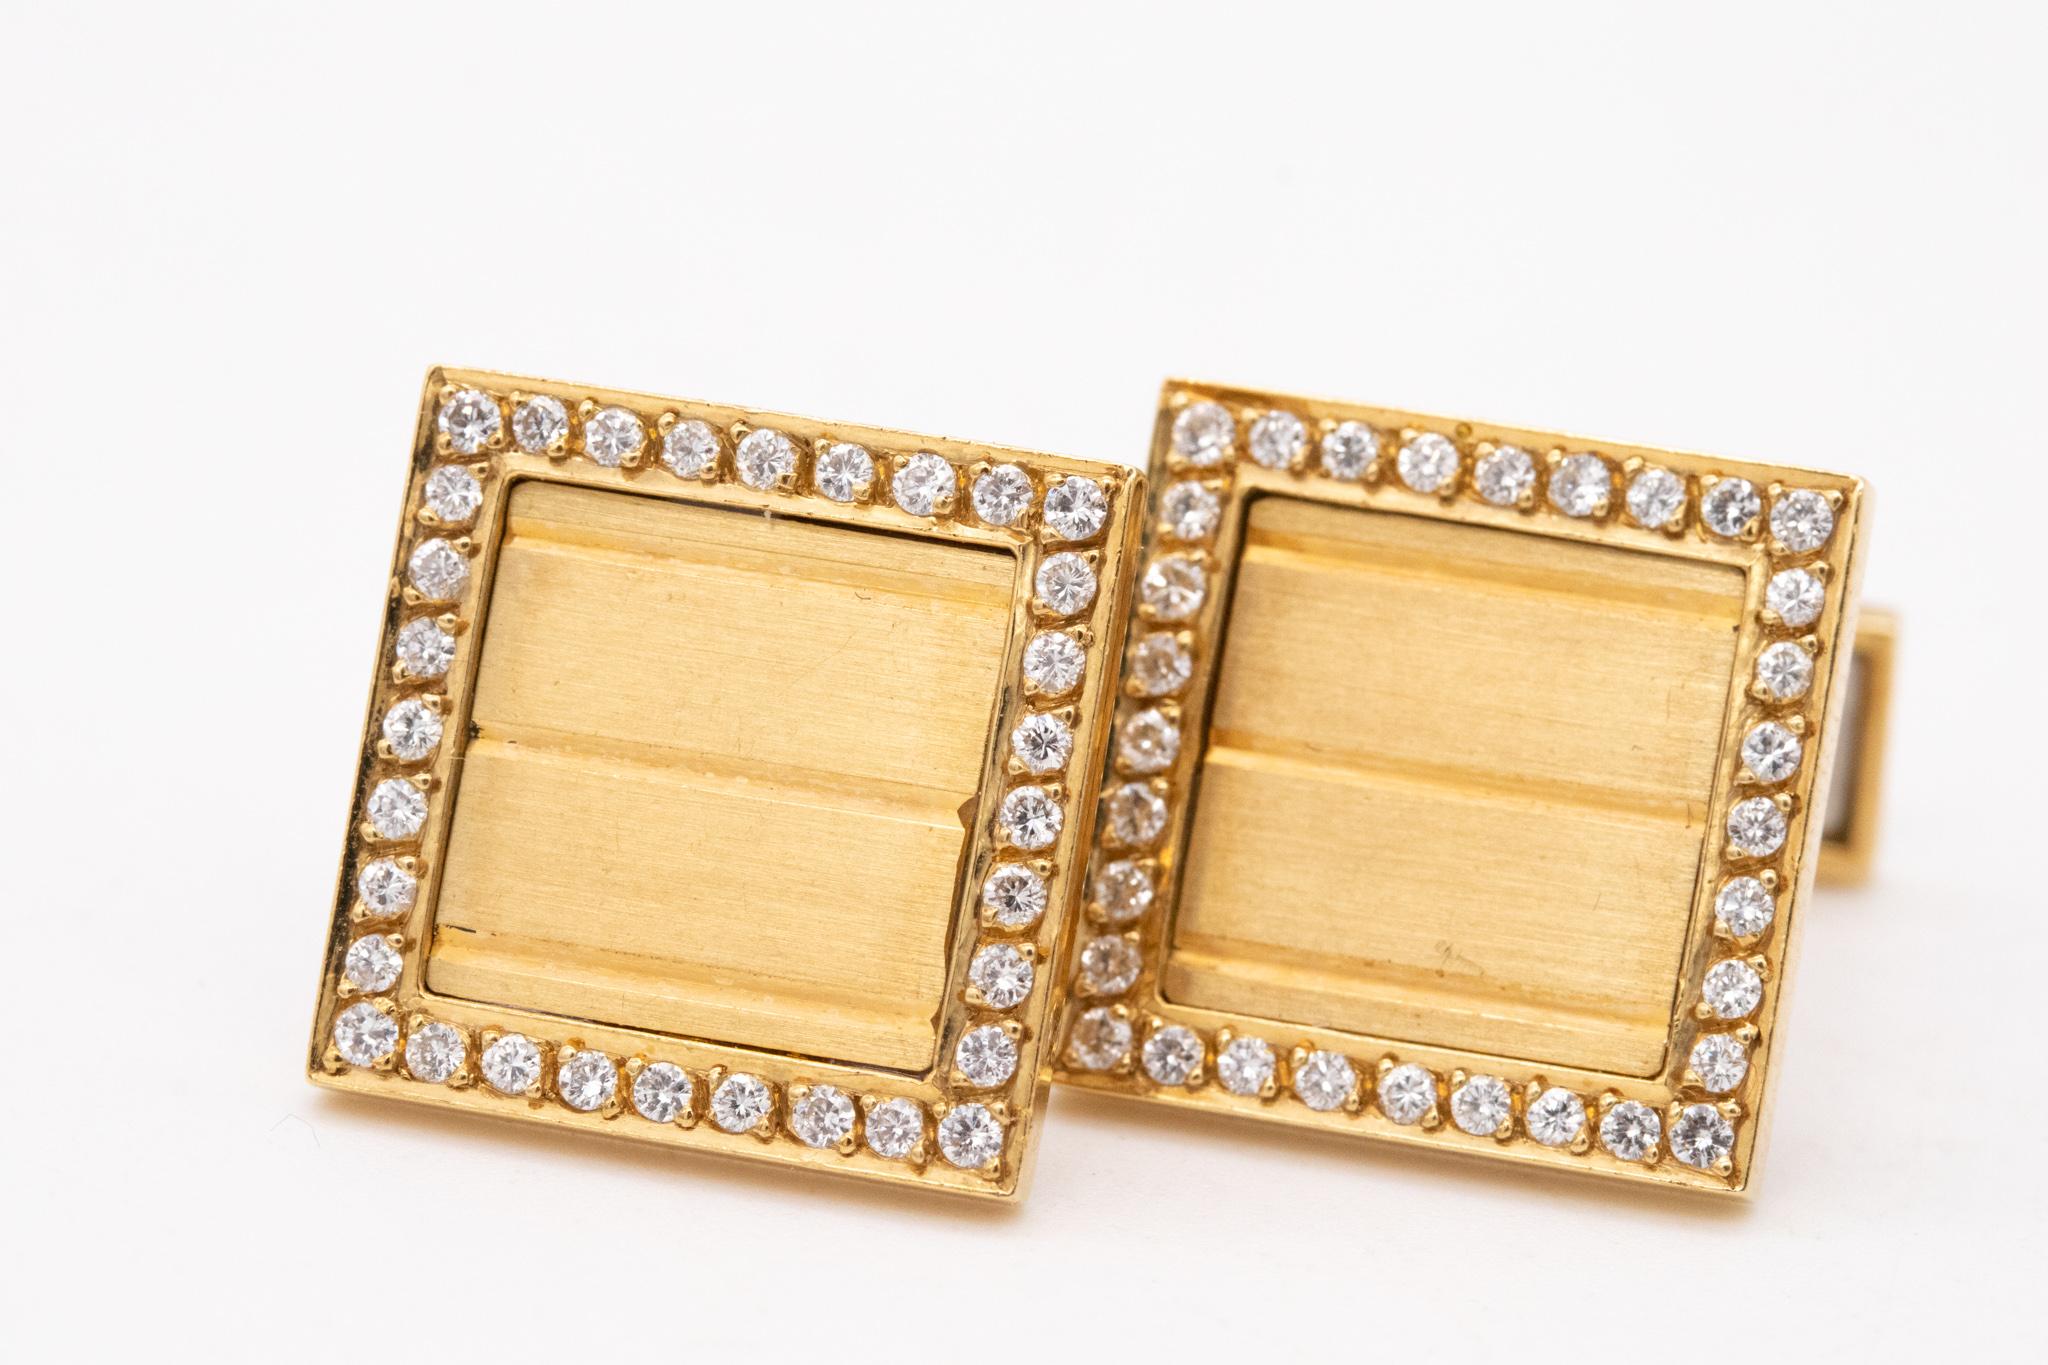 Men's Maison Gerard 1970 Paris 18Kt Yellow Gold Cufflinks With 1.28 Cts Of VS Diamonds